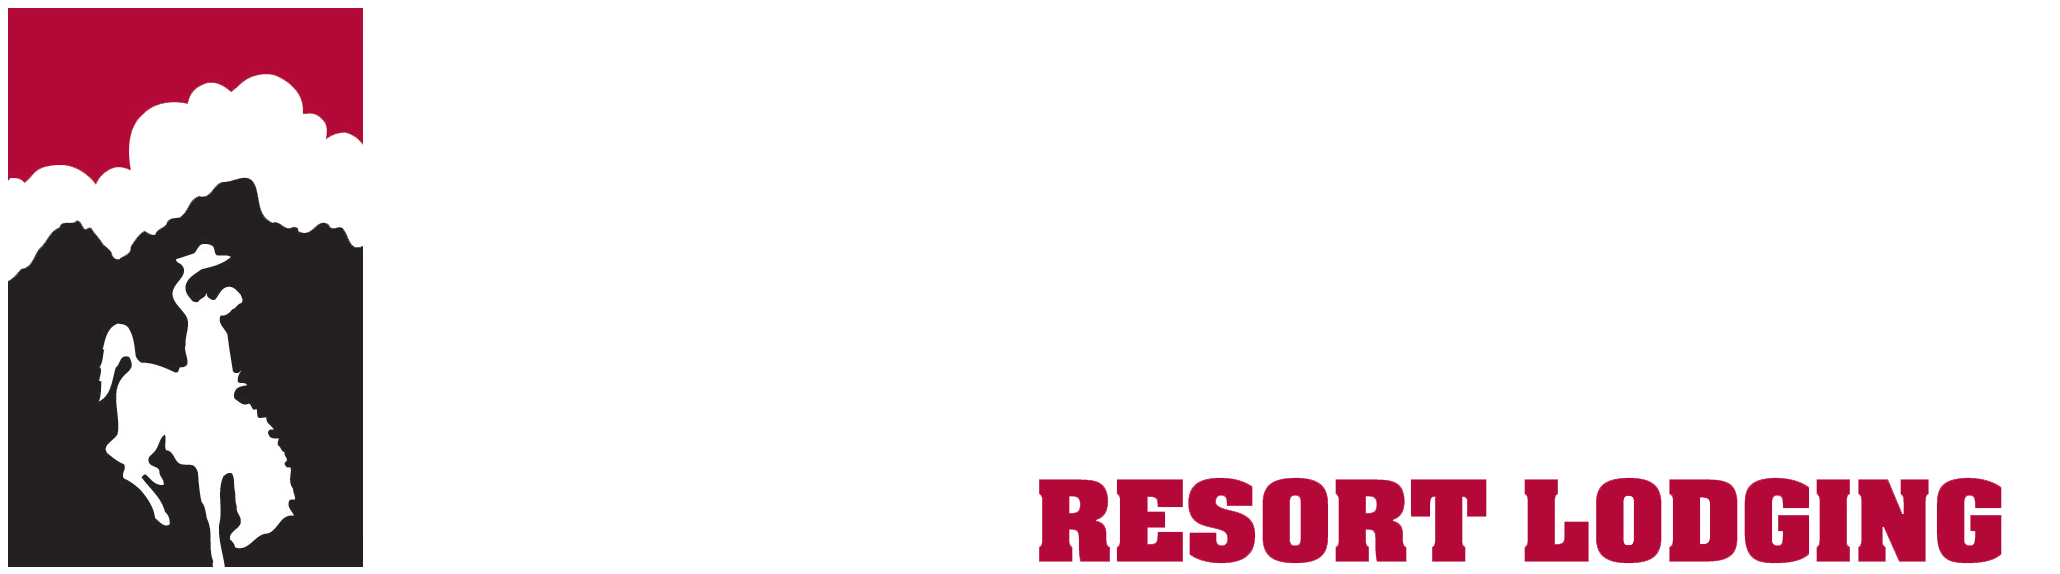 Jackson Hole Resort Lodging